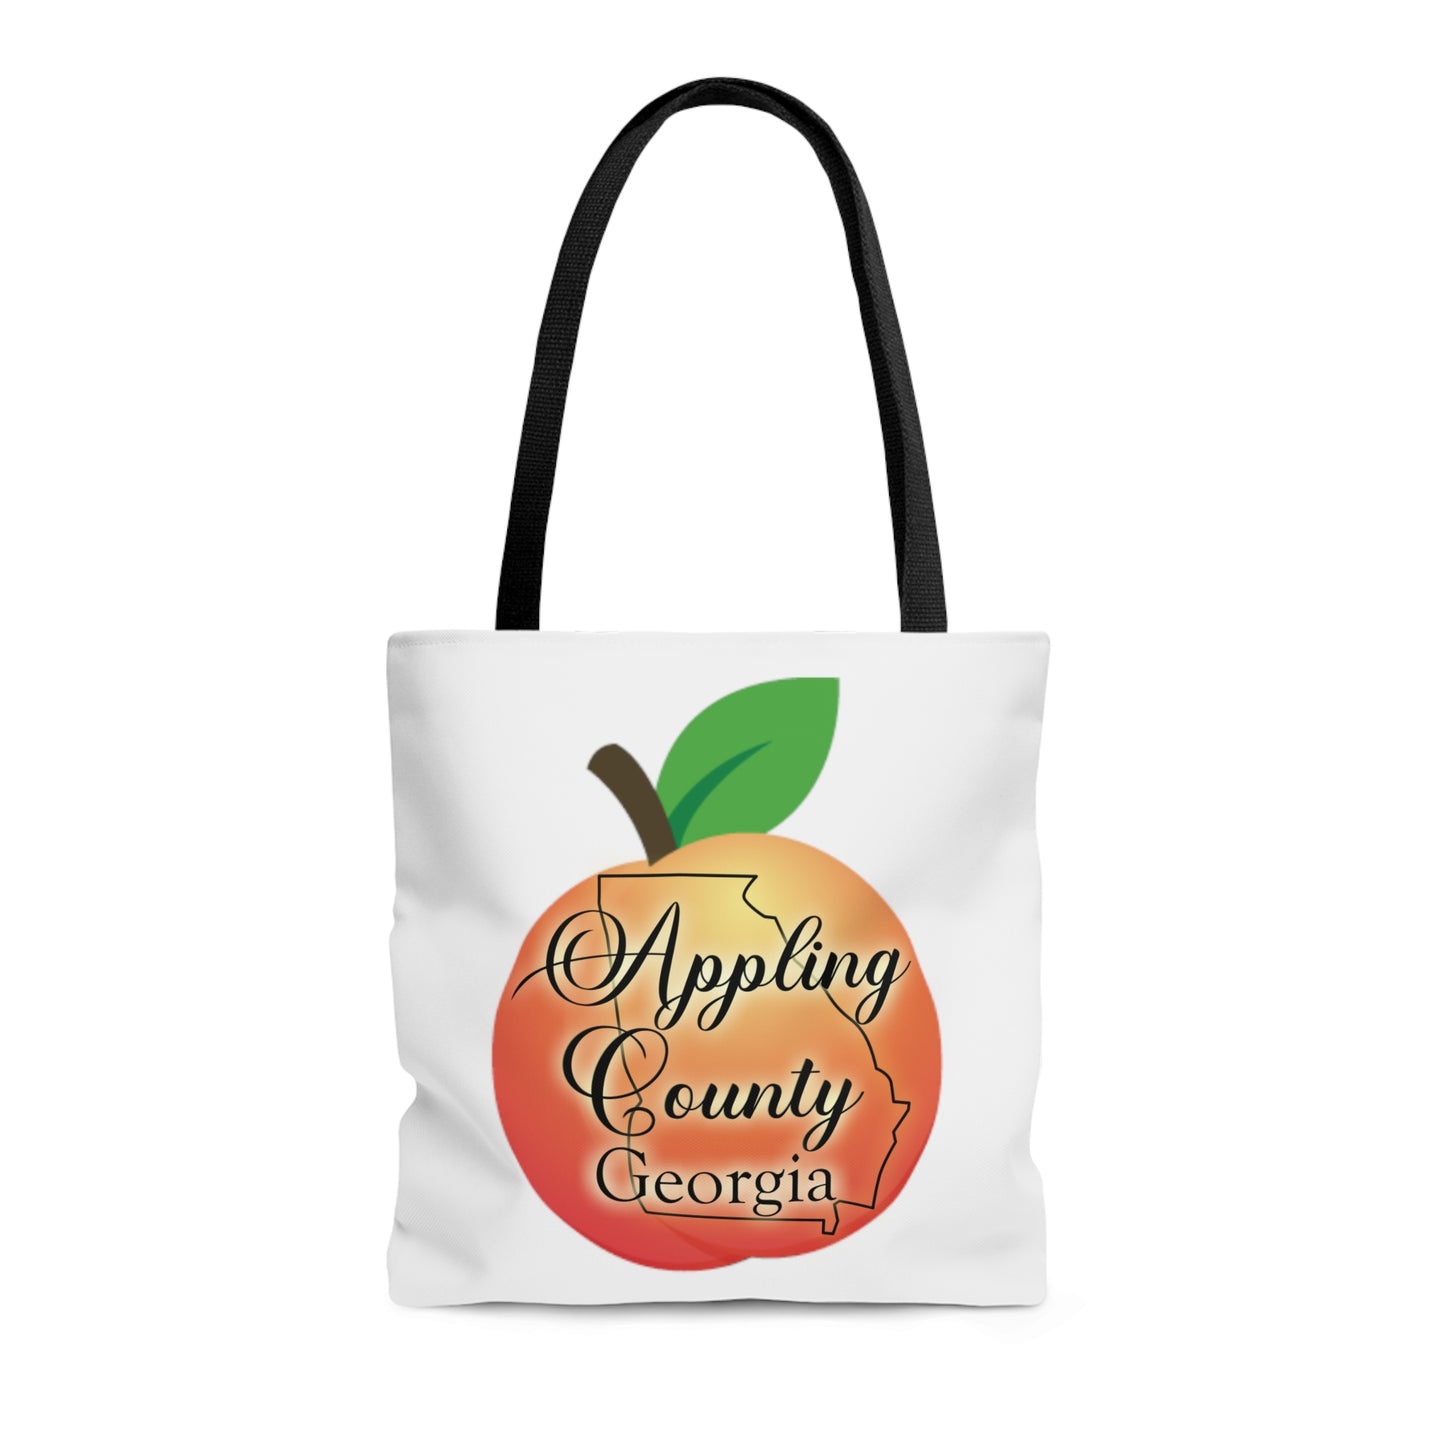 Appling County Georgia Tote Bag